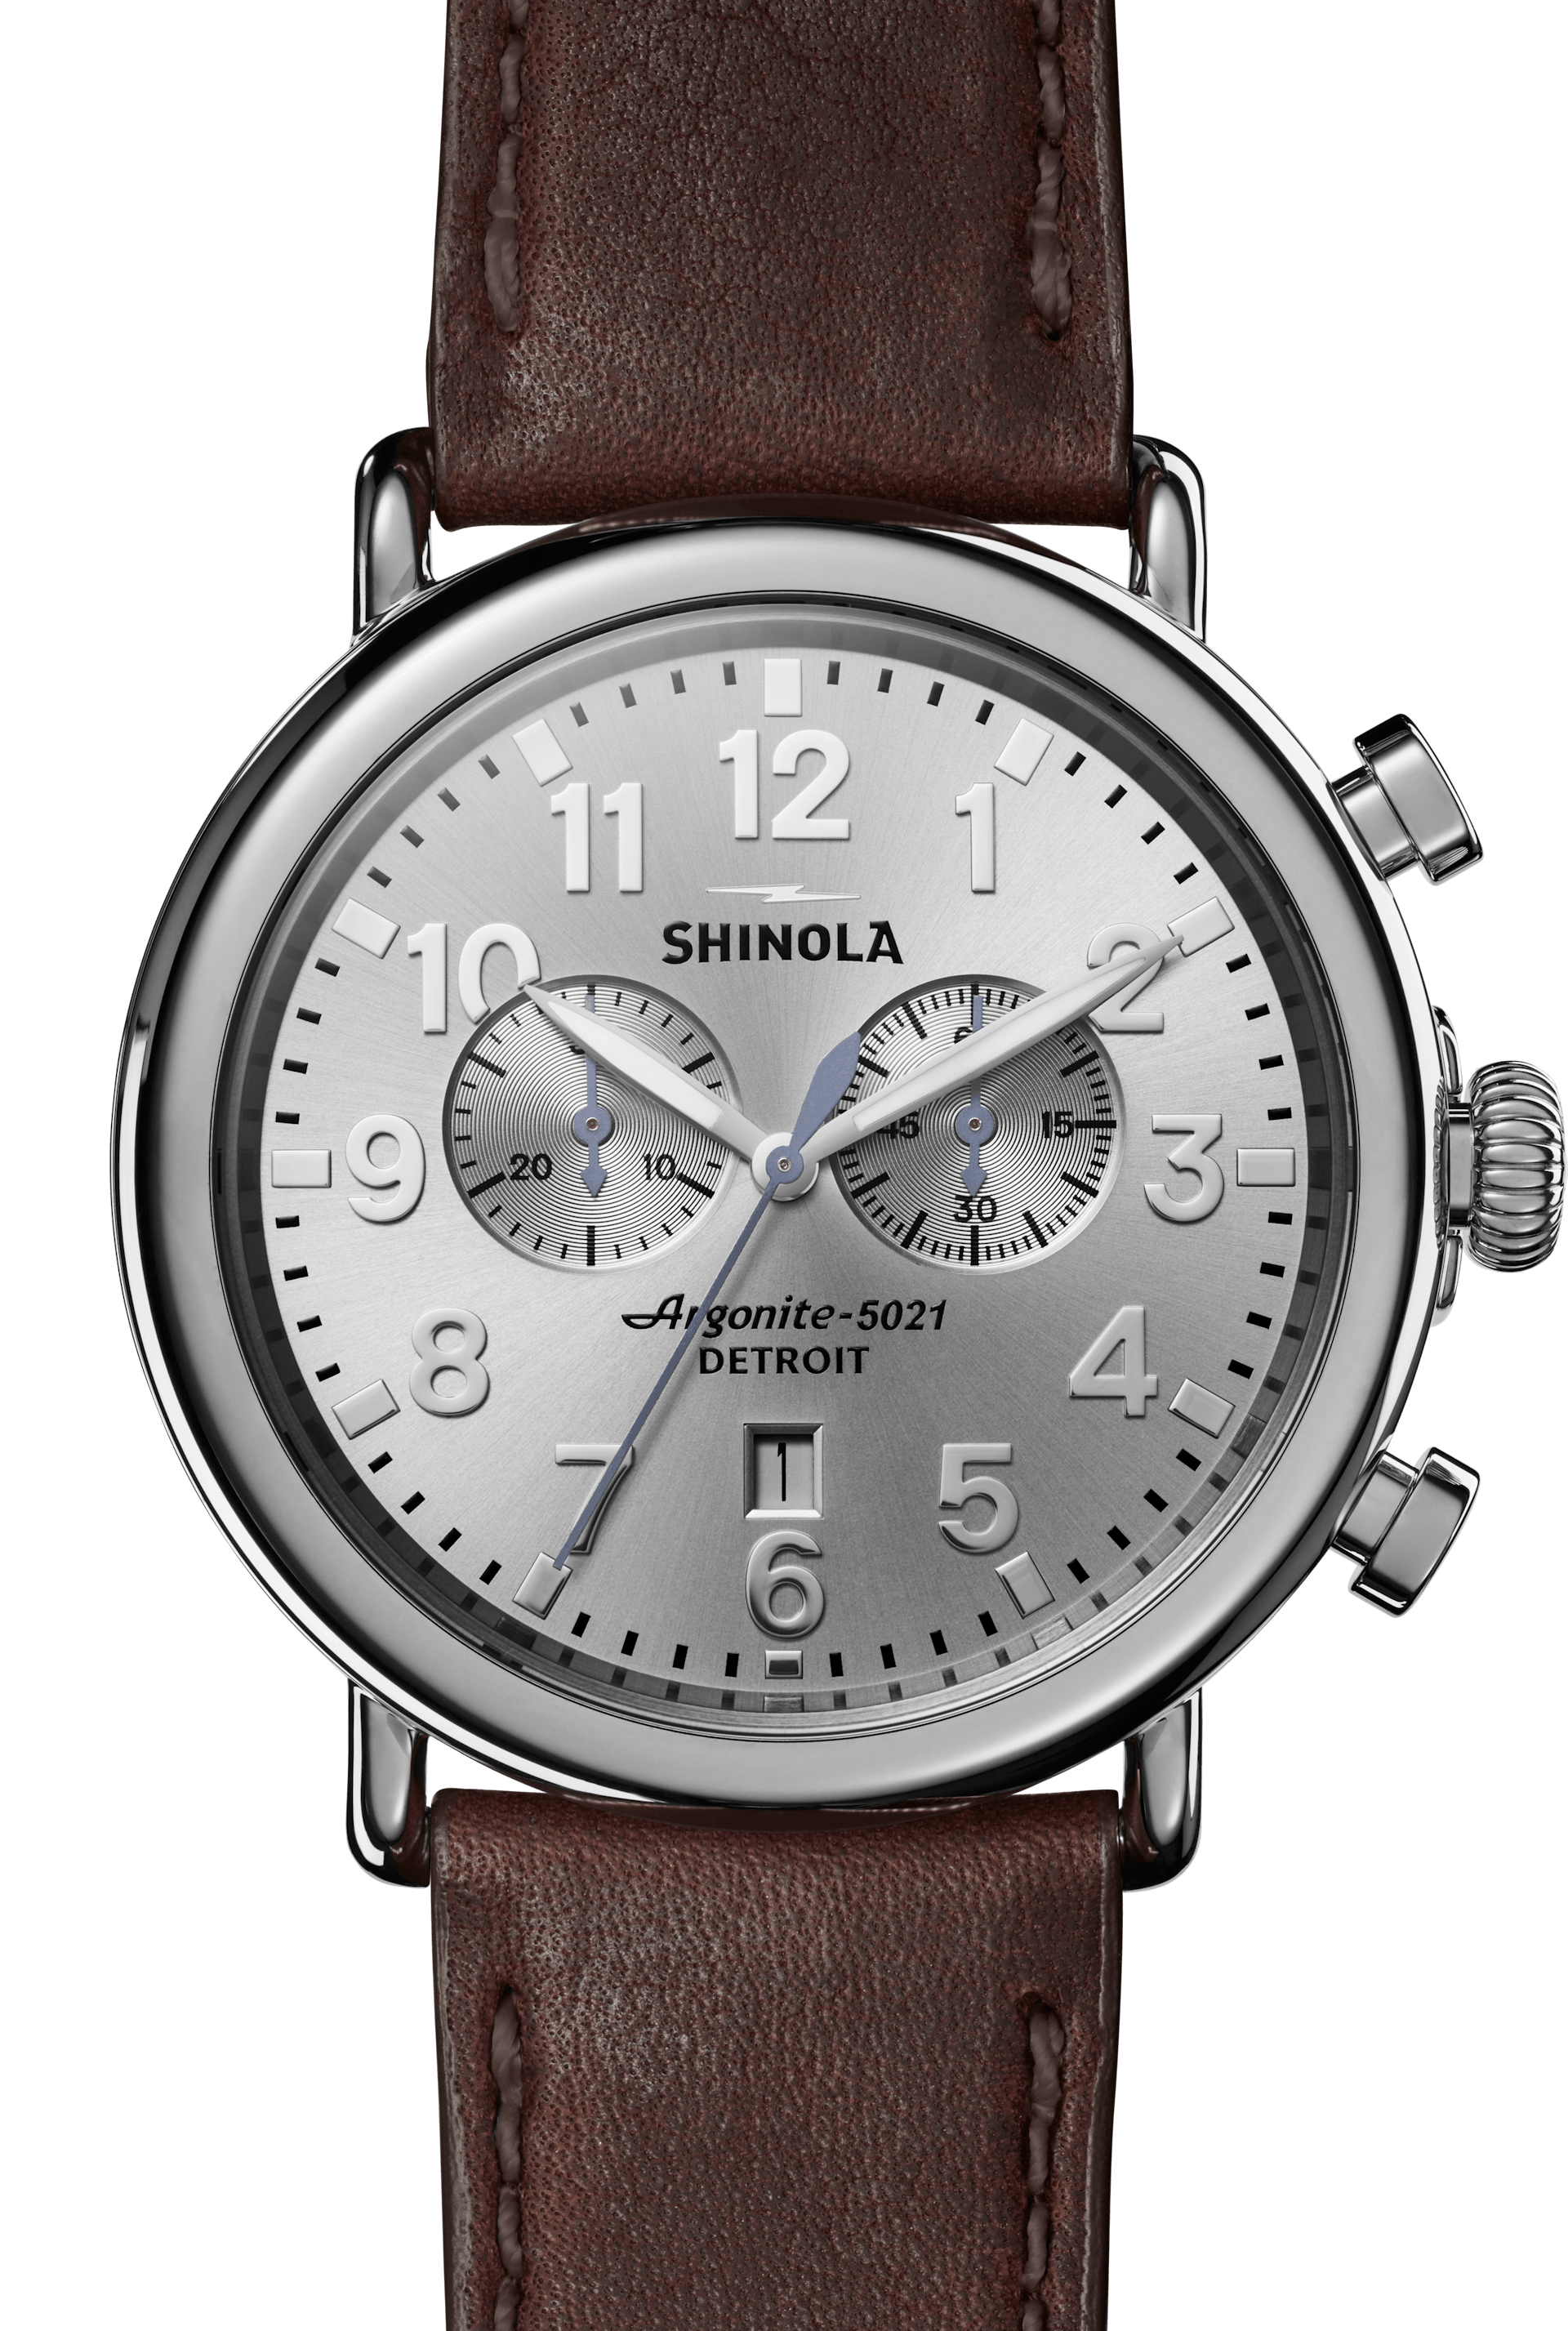 His Style: Shinola Watch